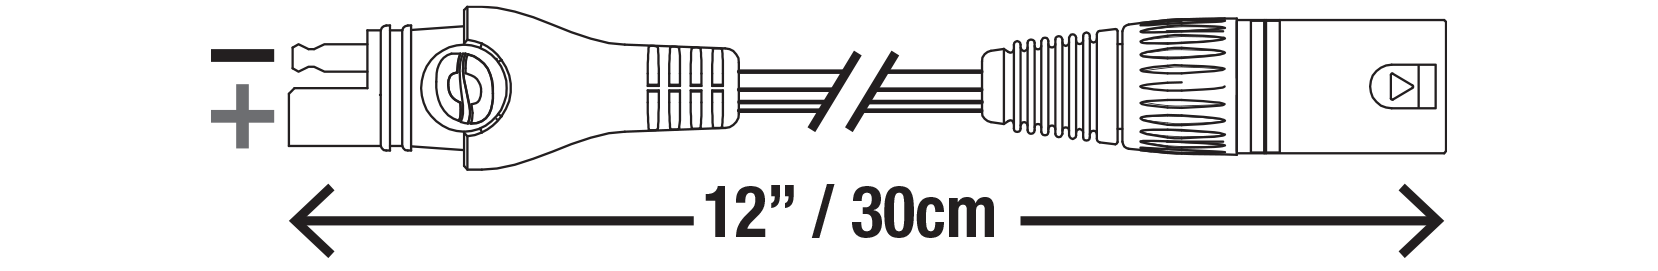 o-49 xlr plug cable length